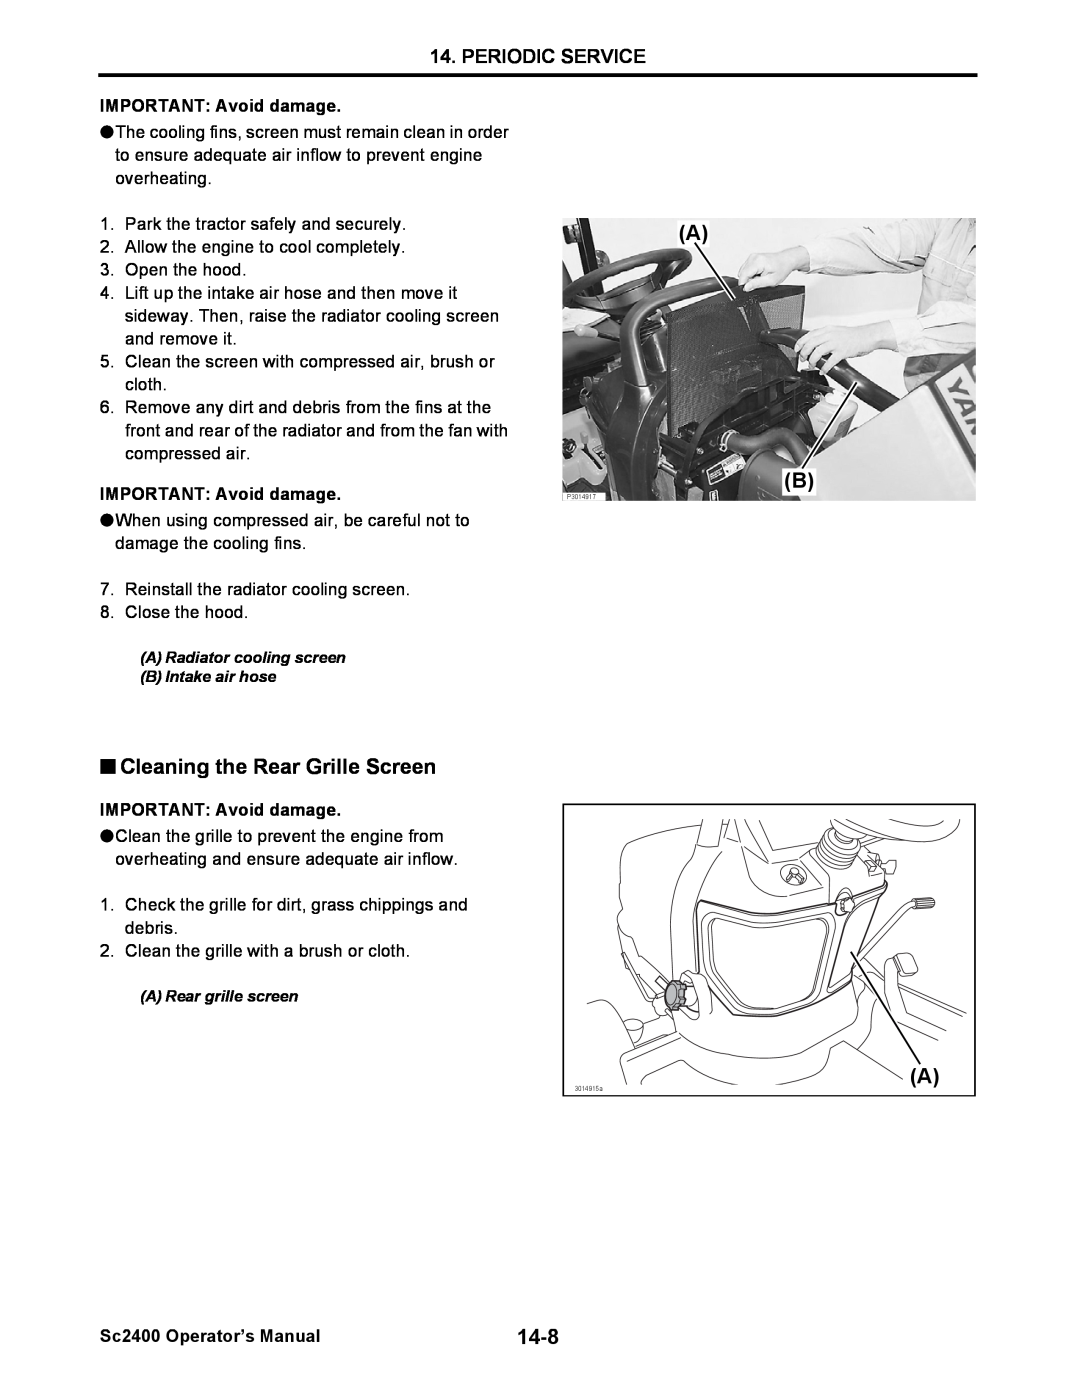 Cub Cadet SC2400 manual Periodic Service, IMPORTANT: Avoid damage, Sc2400 Operator’s Manual 